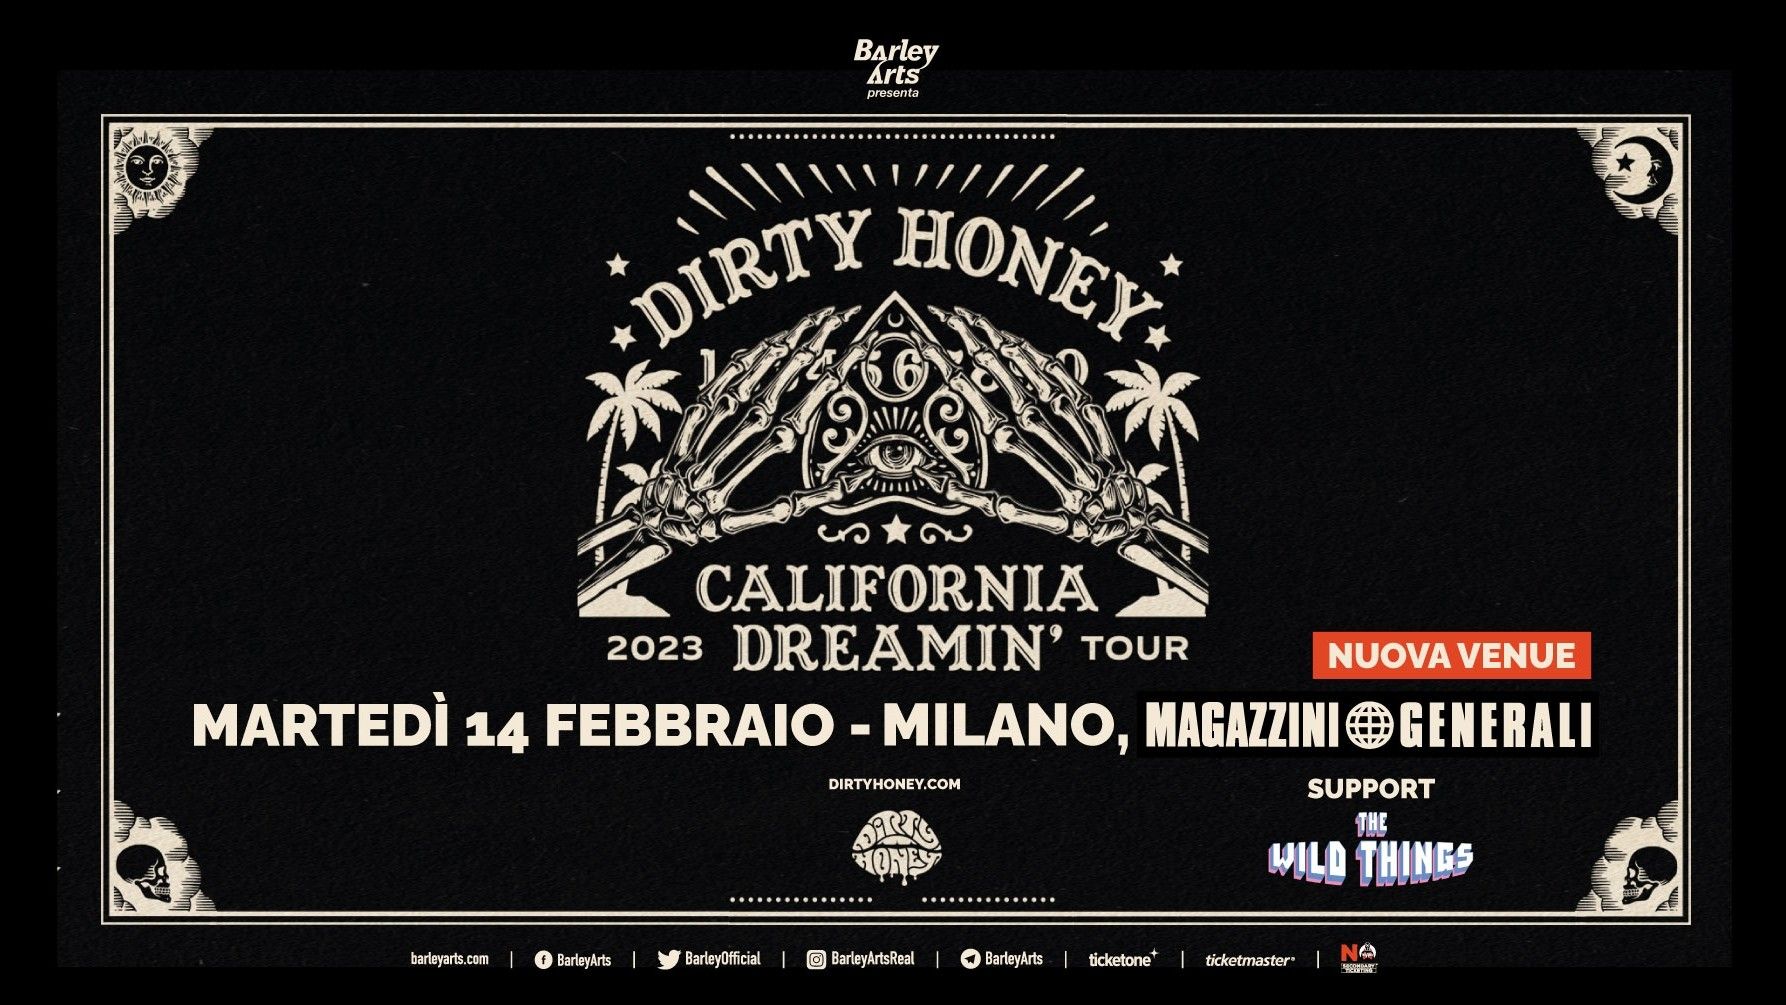 Dirty Honey "California Dreamin' Tour 2023"